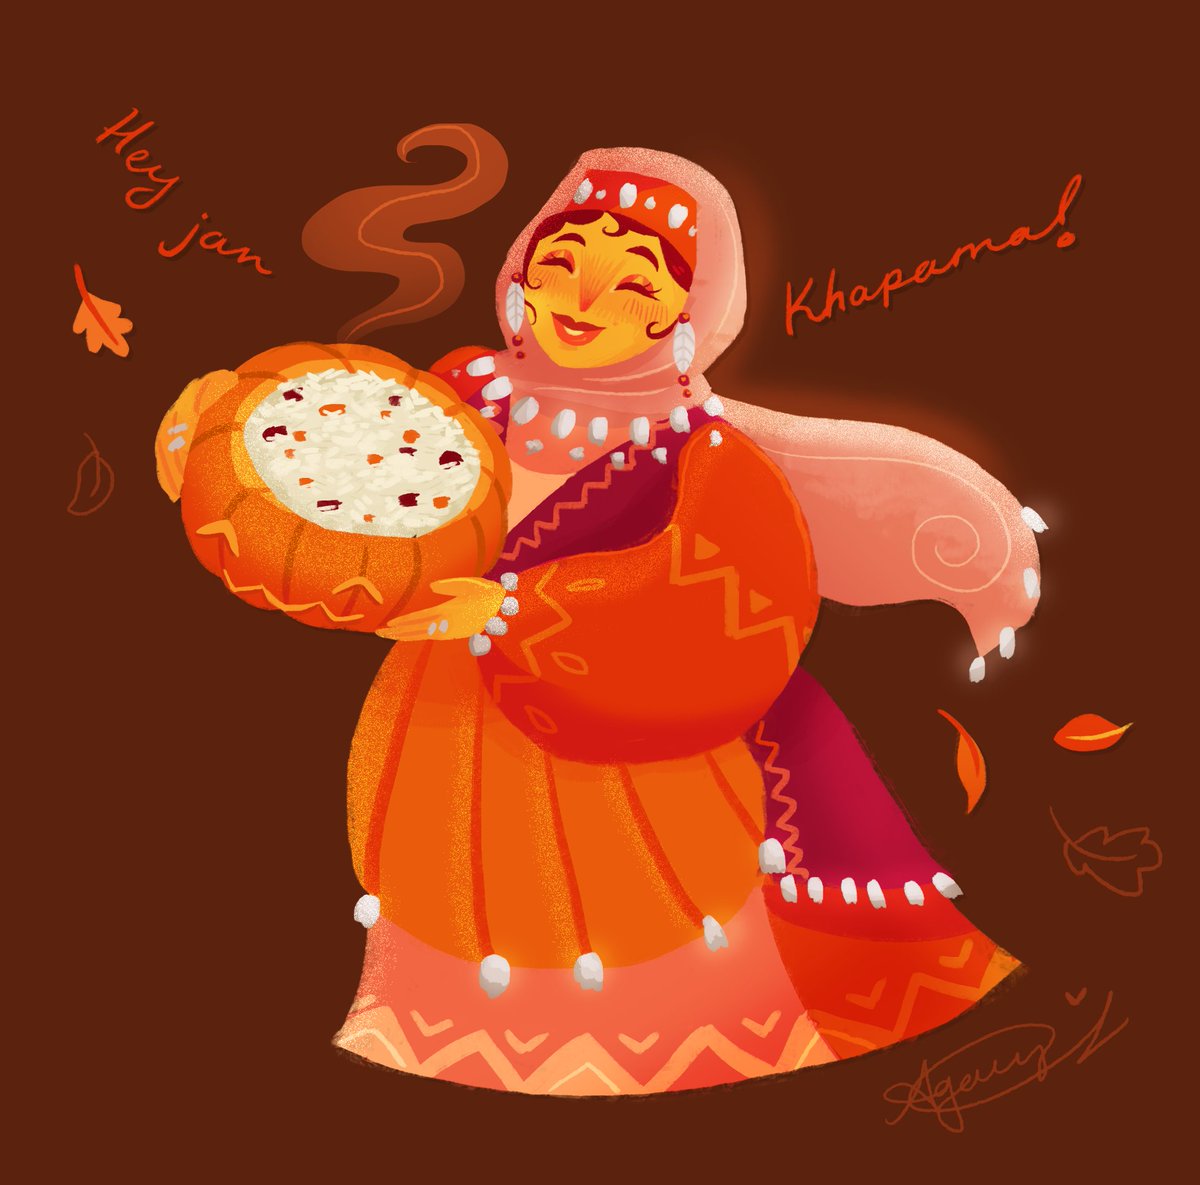 🎃🧡🍂 Hamov hotov Khapama~ Happy Halloween everyone!! Tsovik isn't sure what a jackolantern is so she made khapama for you